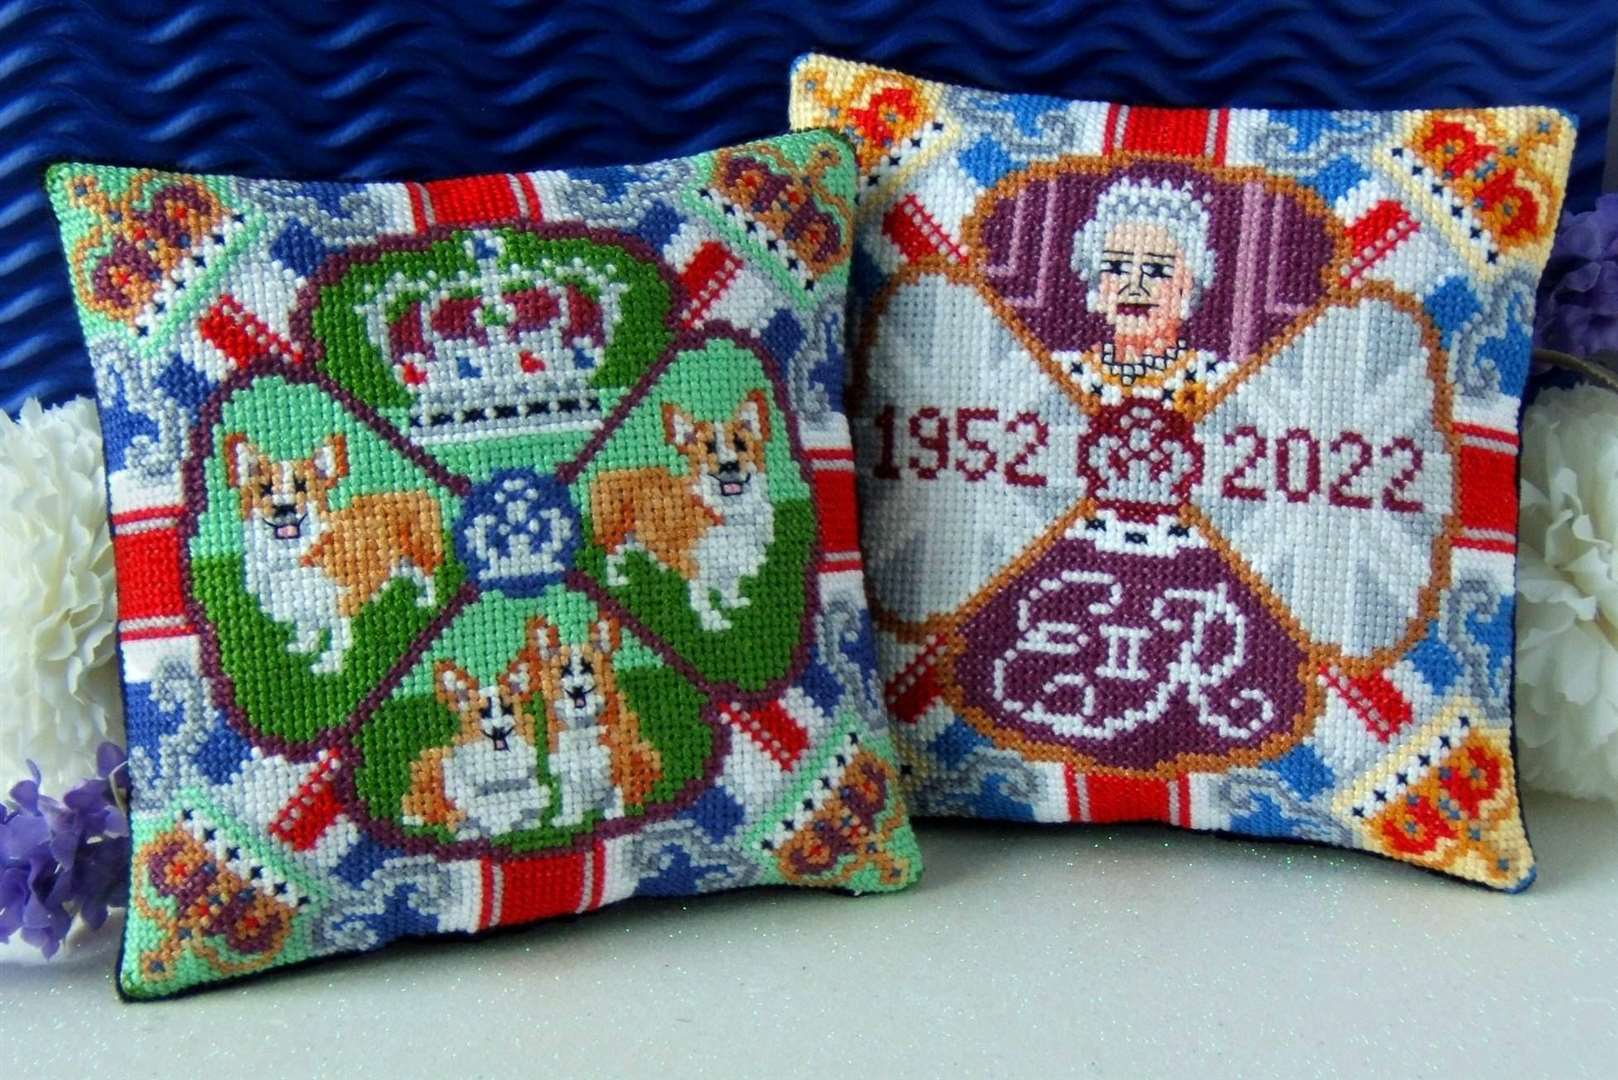 Sheena's commemorative Jubilee designs